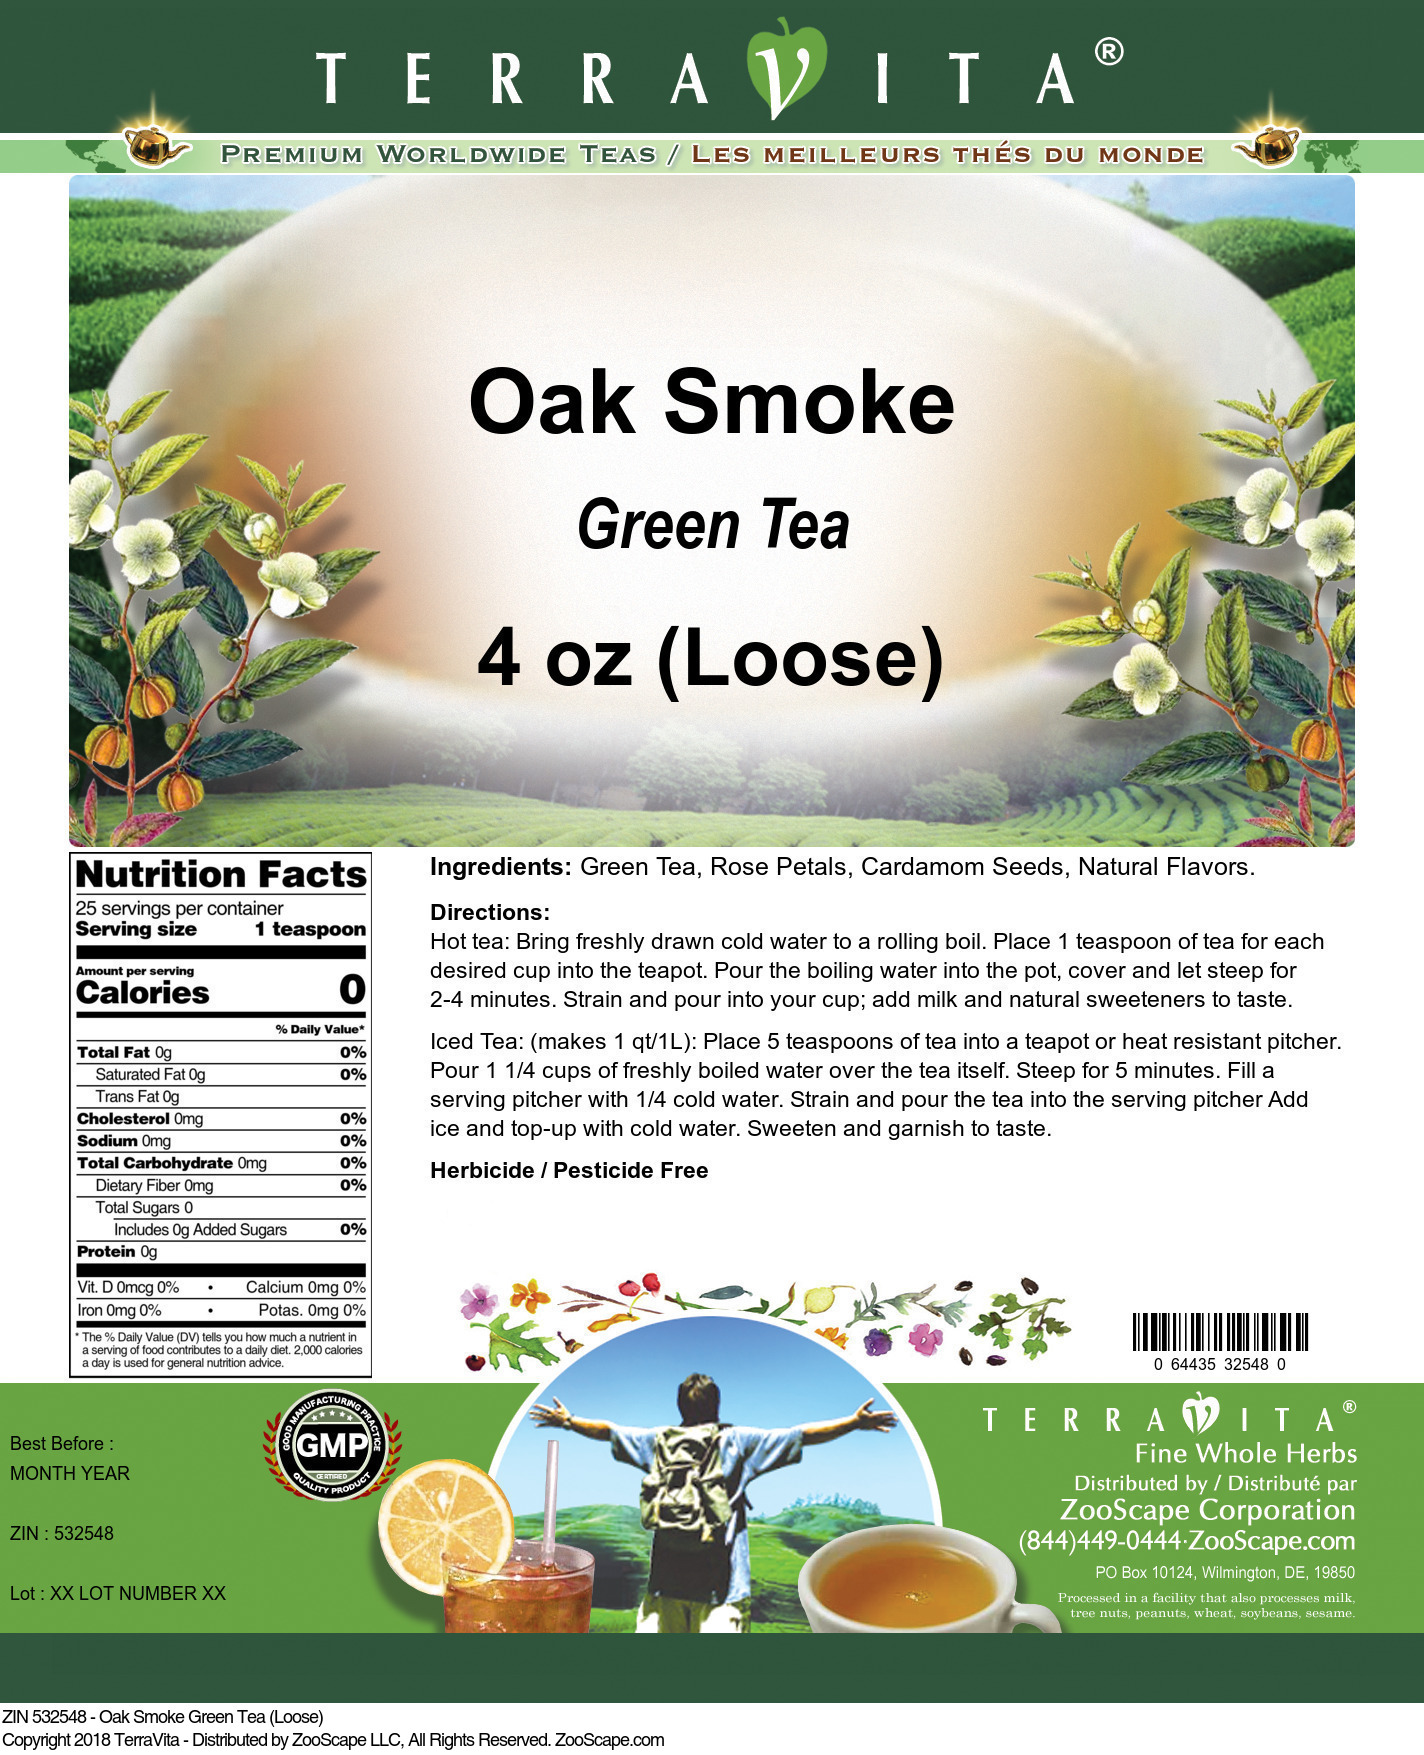 Oak Smoke Green Tea (Loose) - Label